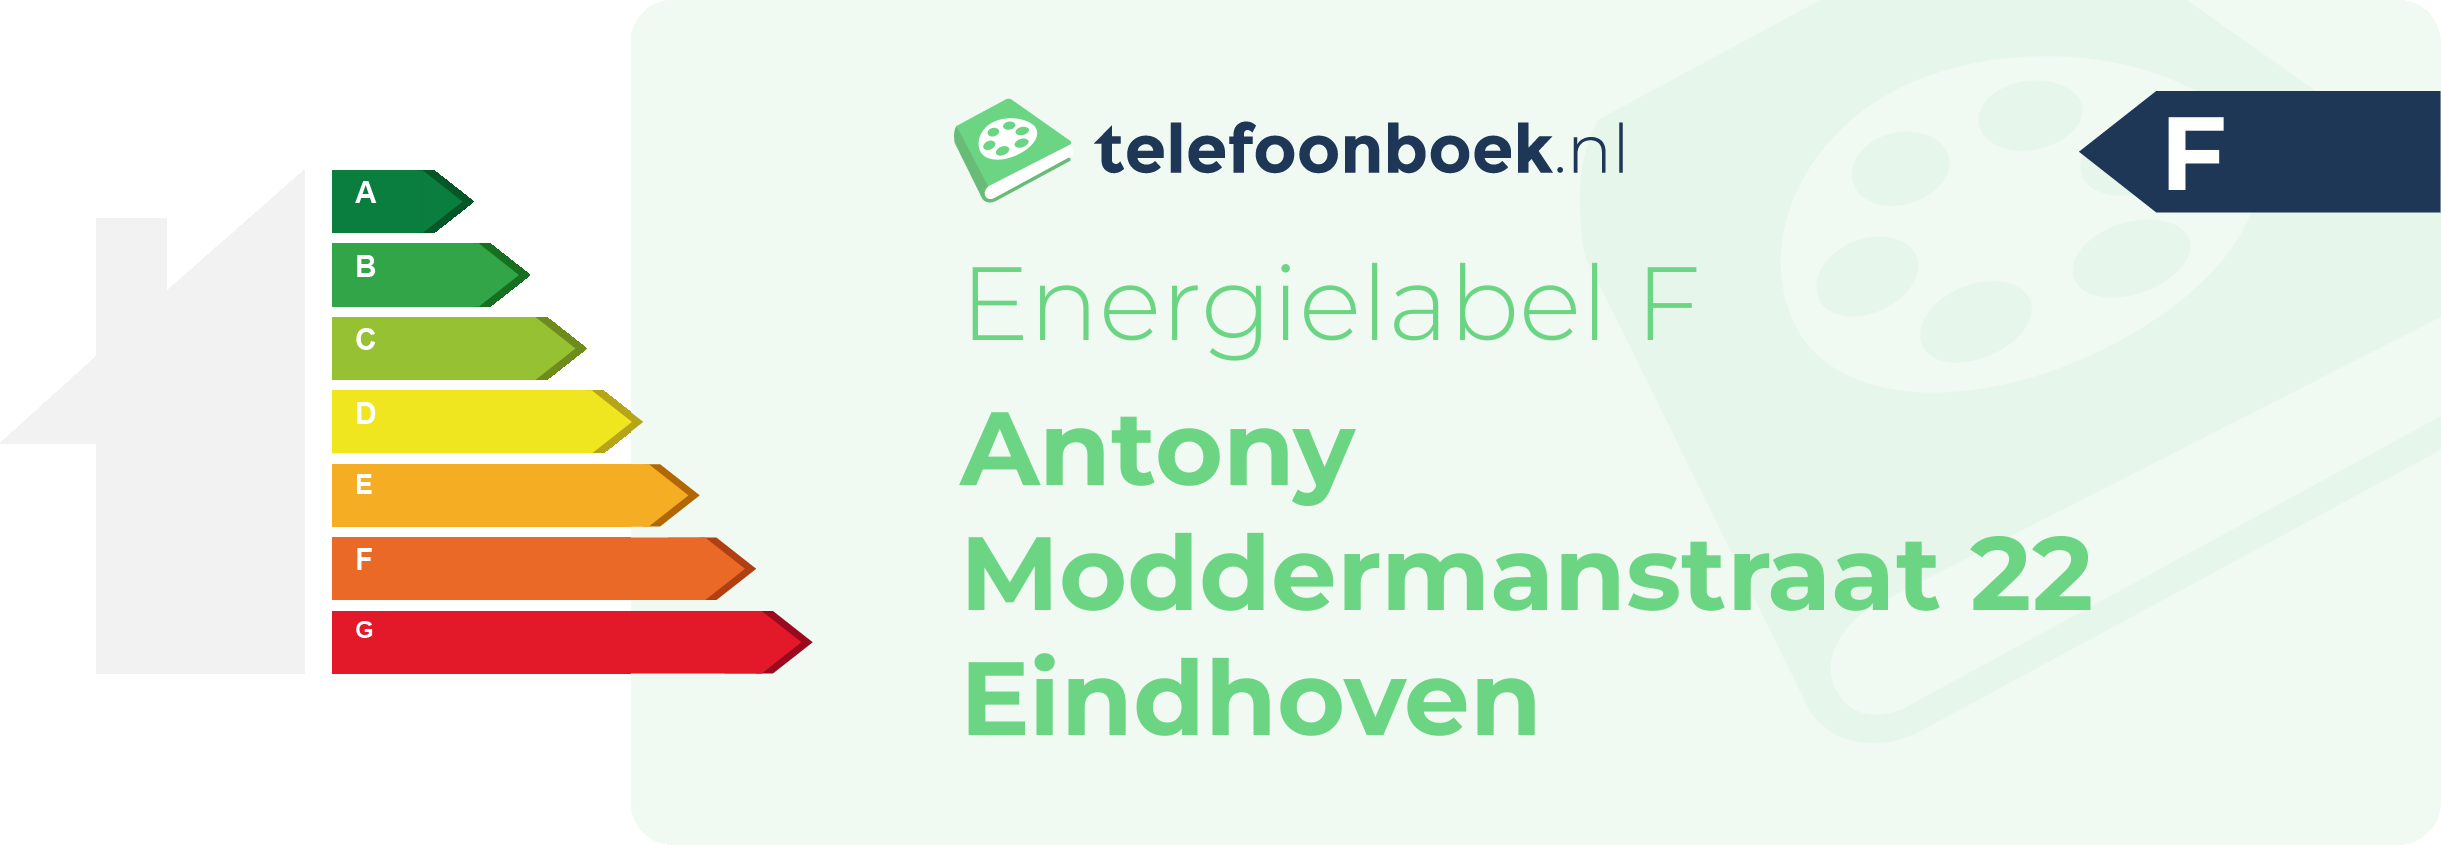 Energielabel Antony Moddermanstraat 22 Eindhoven